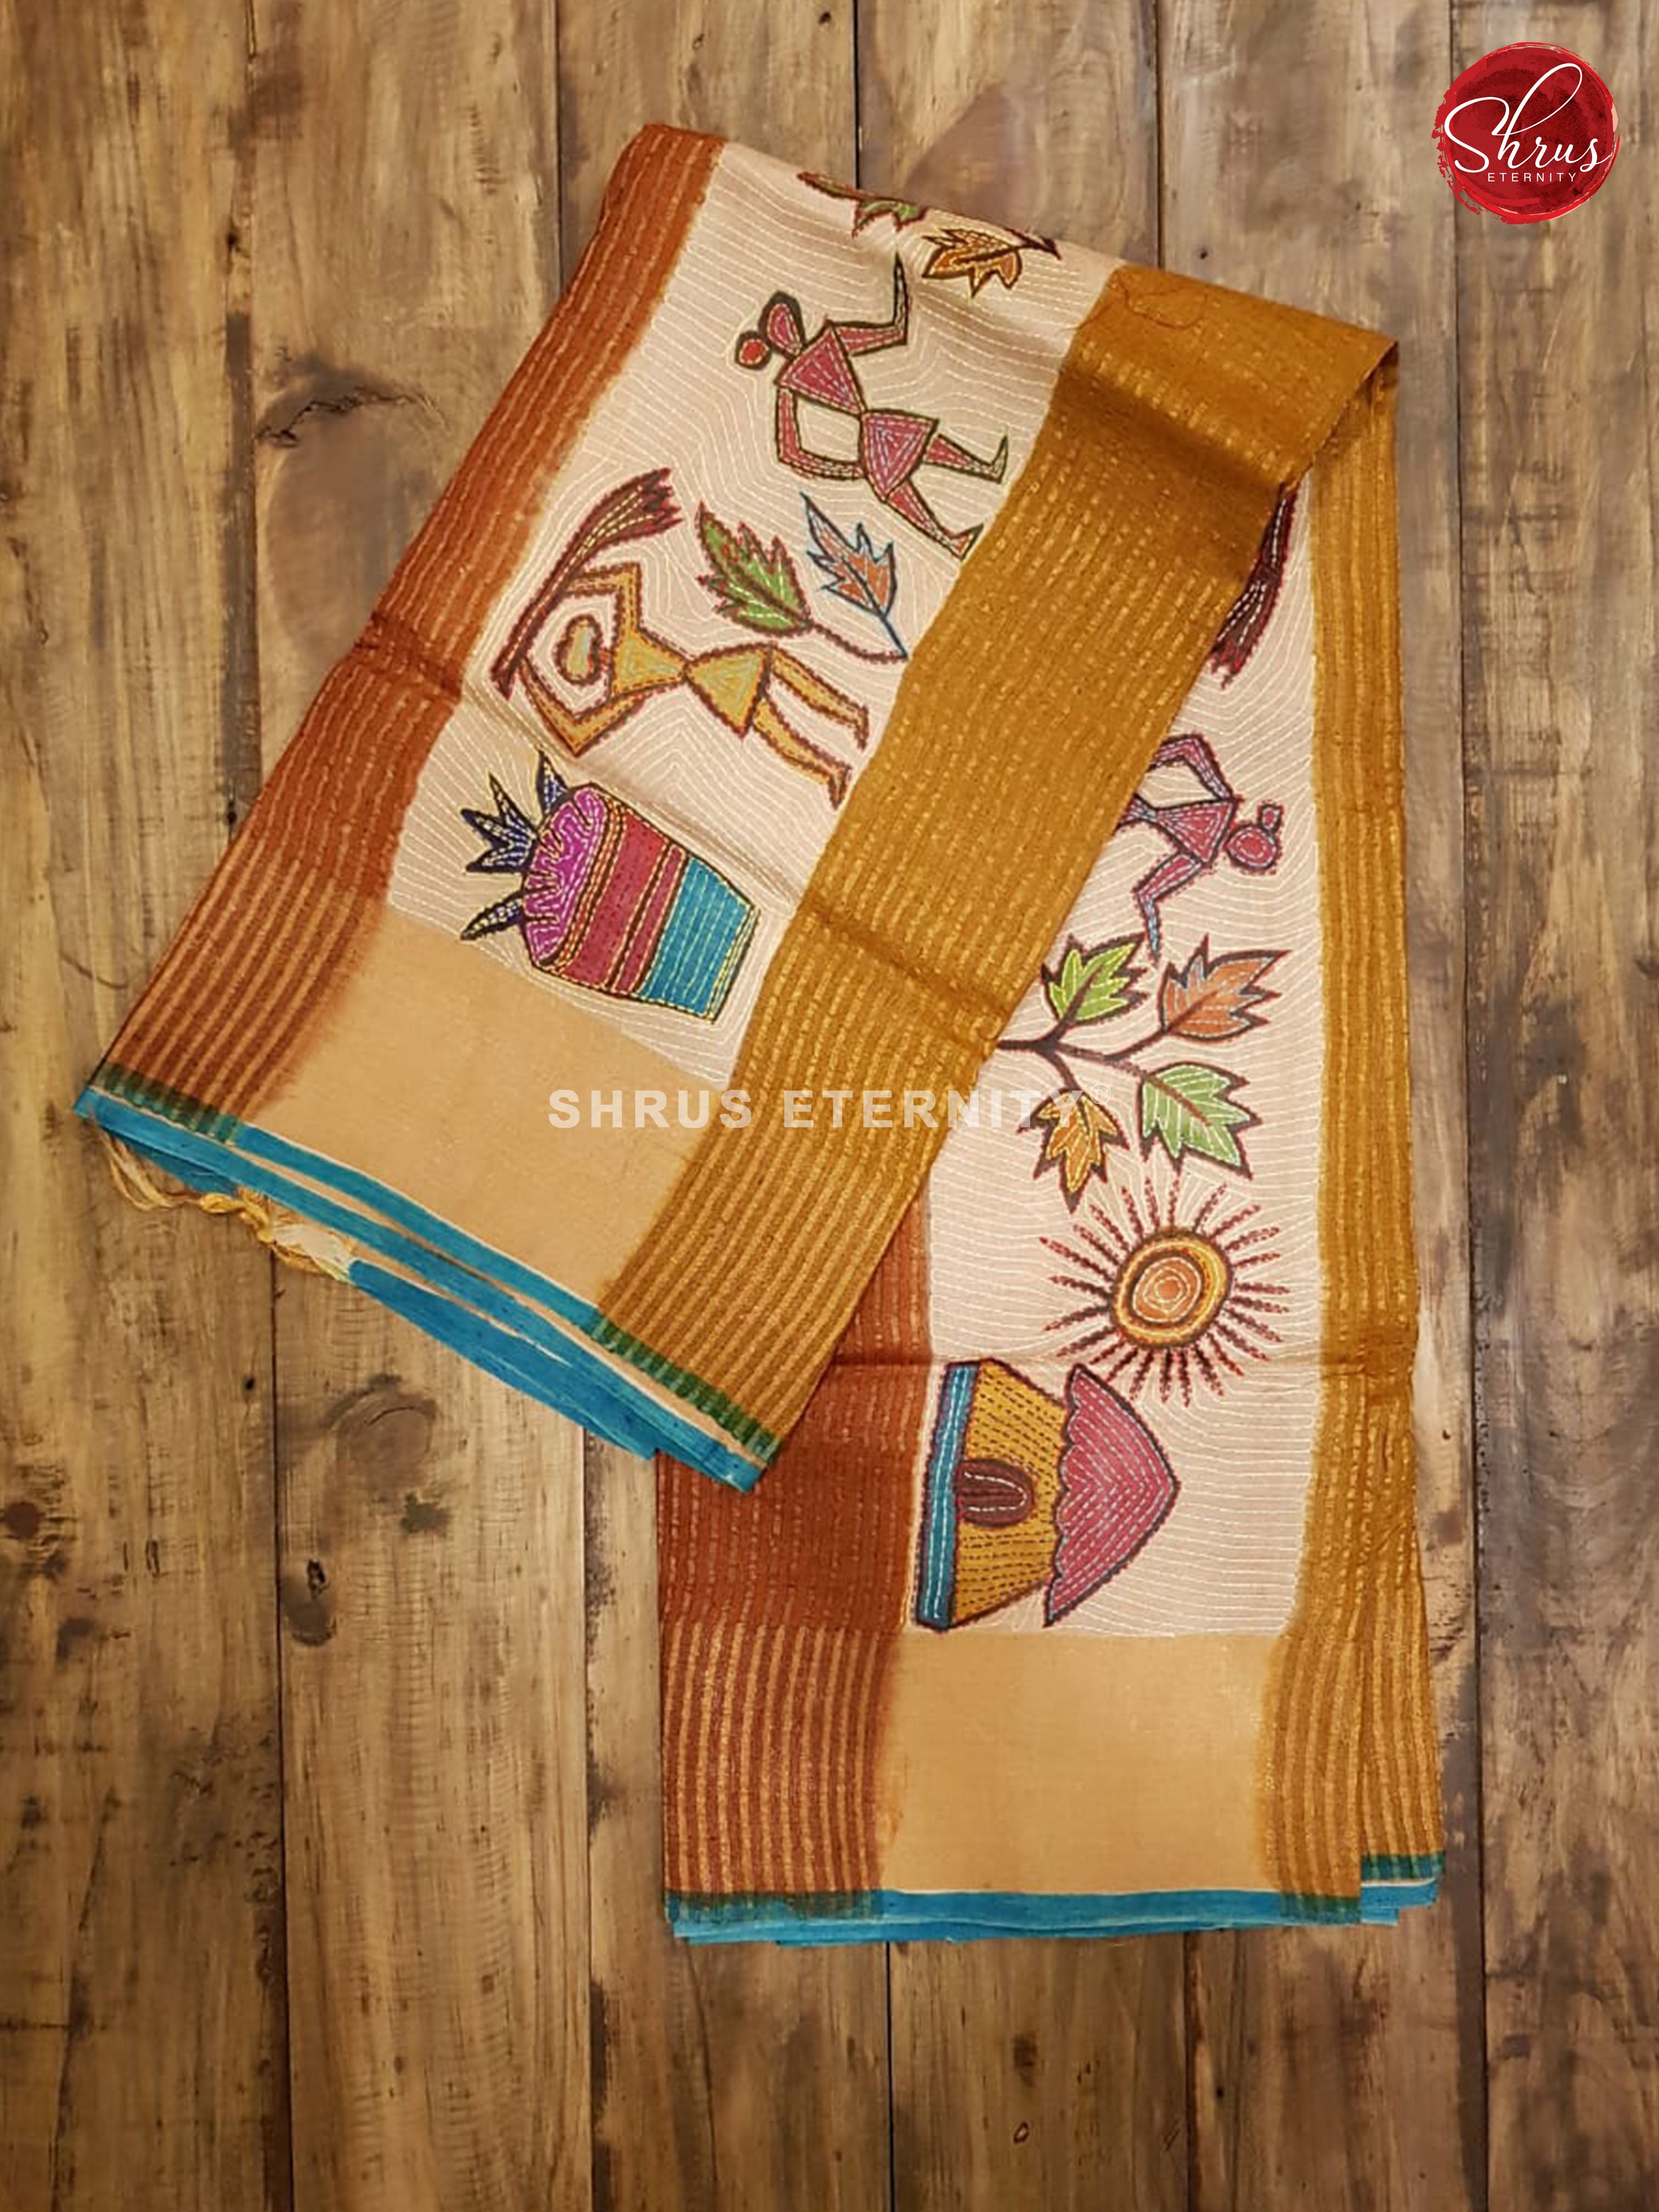 Brick Orange & Cream - Tussar (Kantha Stitch) - Shop on ShrusEternity.com